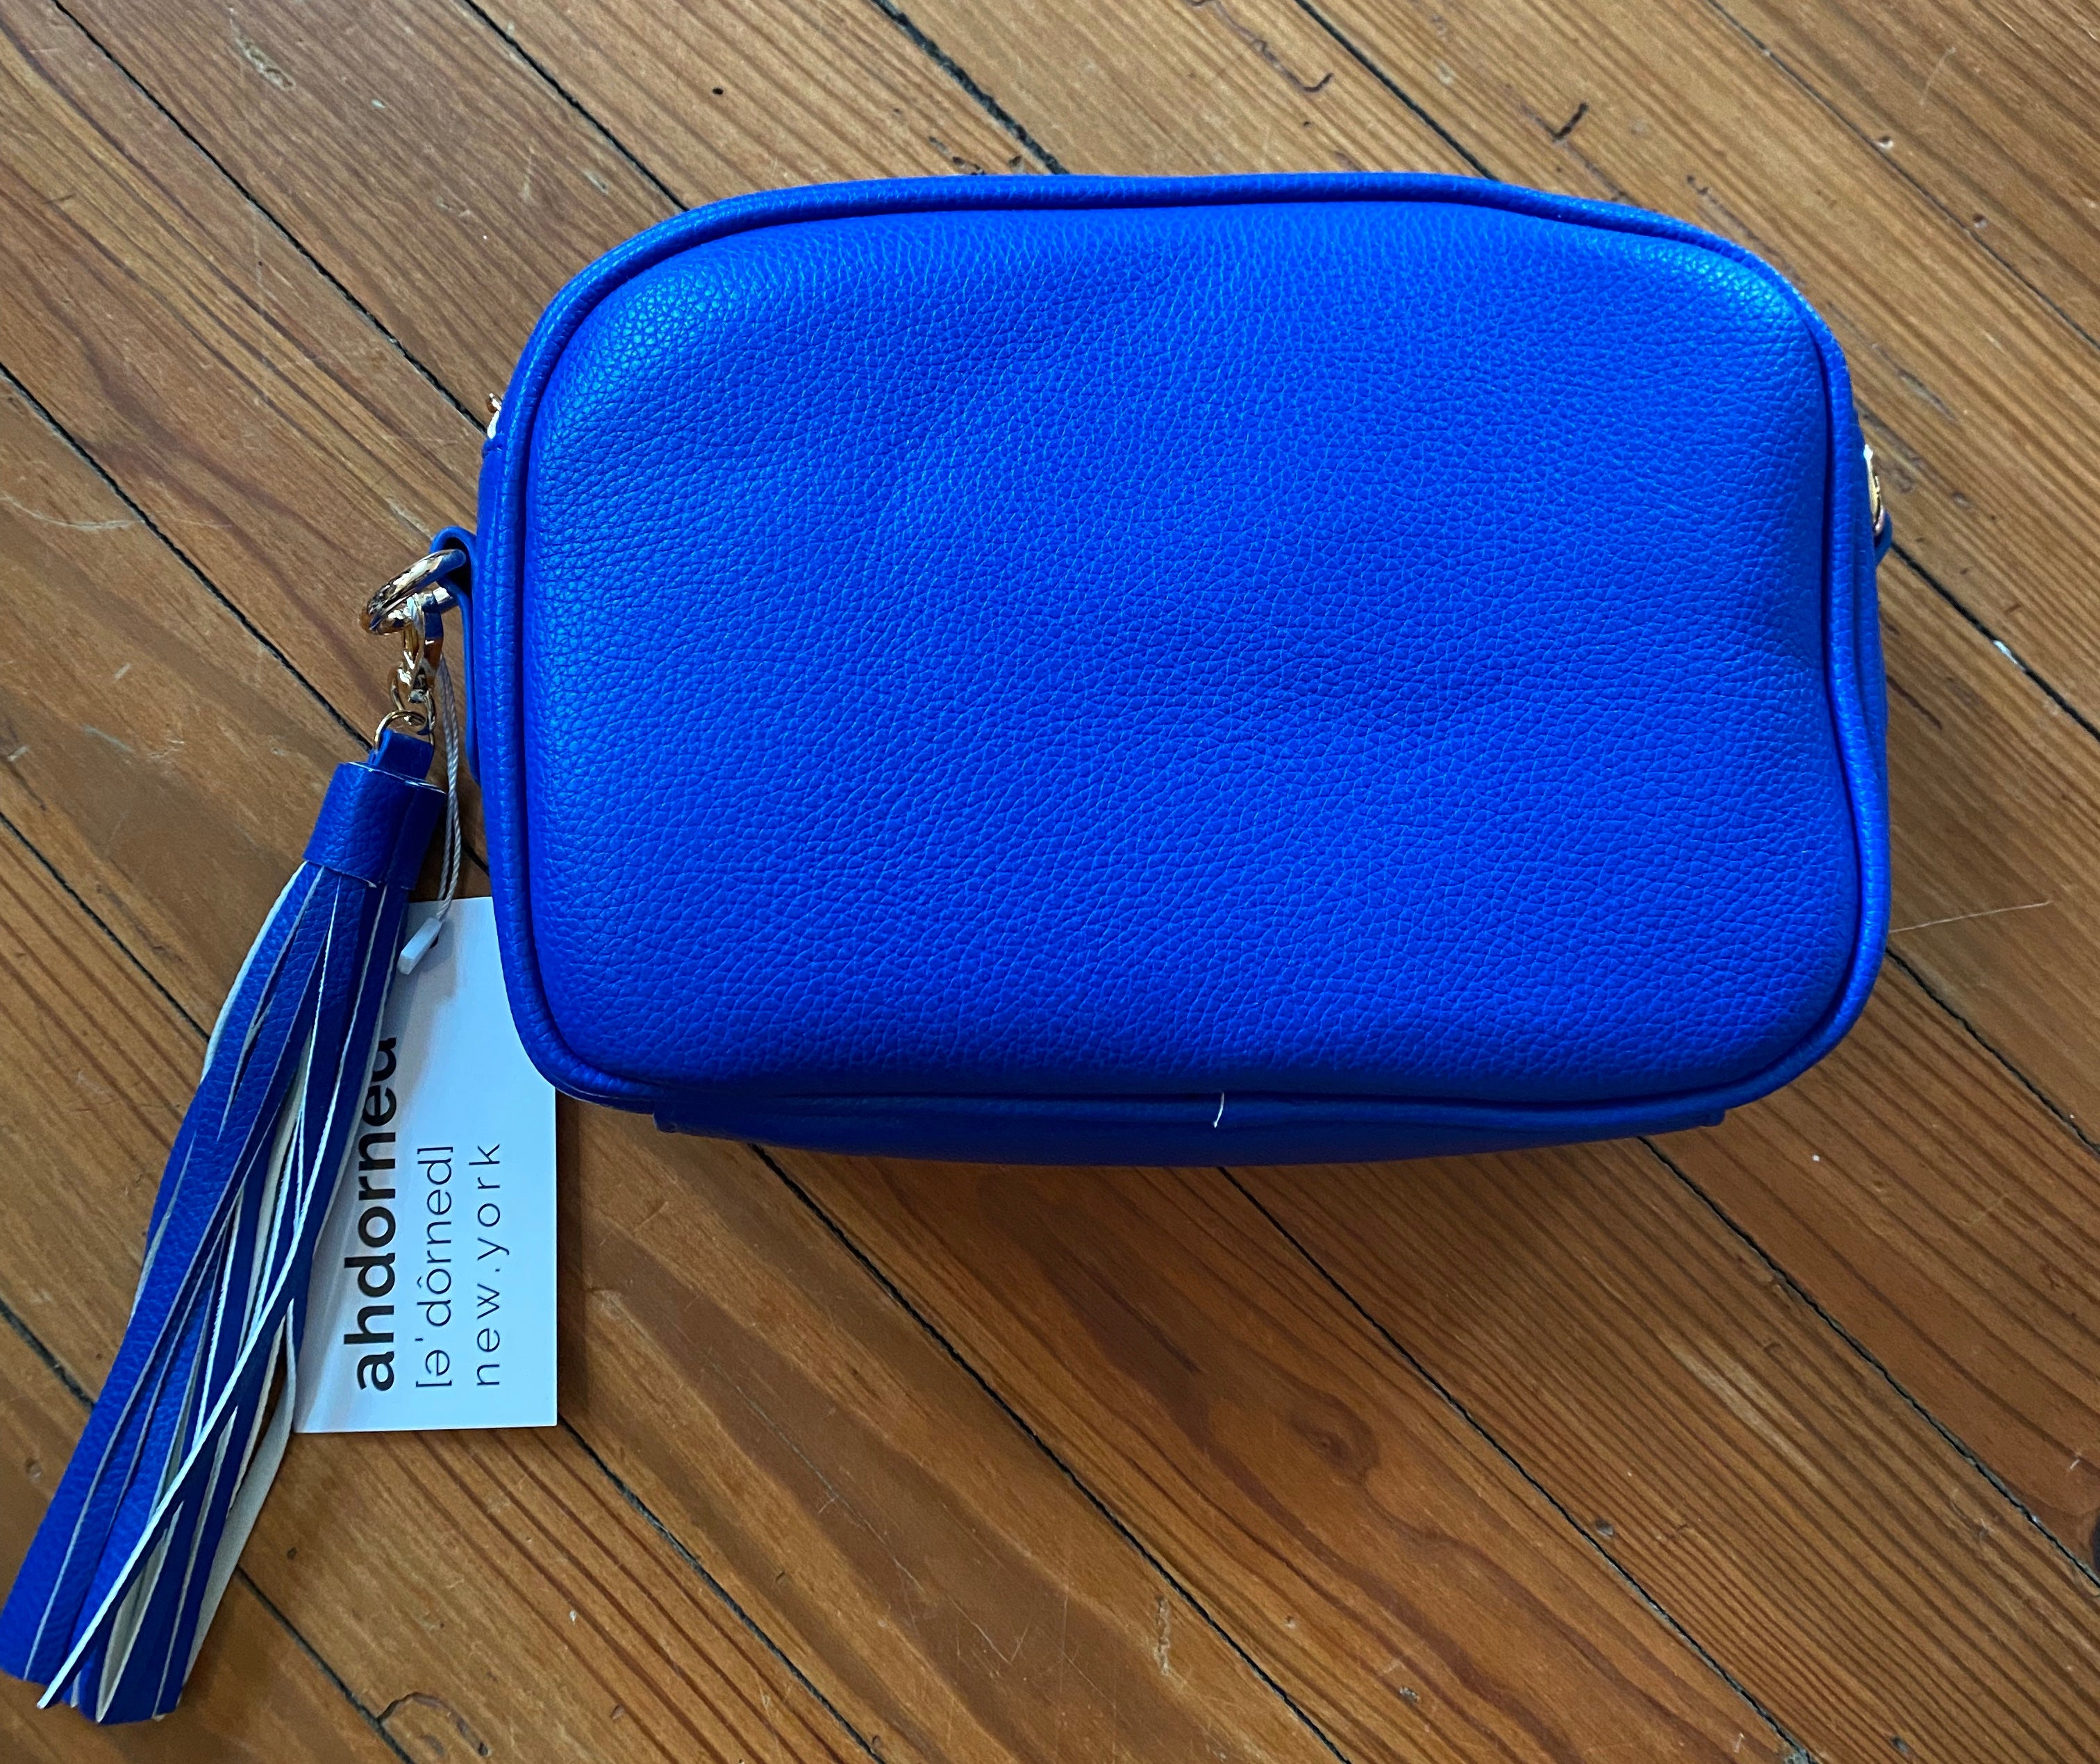 Ahdorned Crossbody Bag With Tassell - Bright Blue